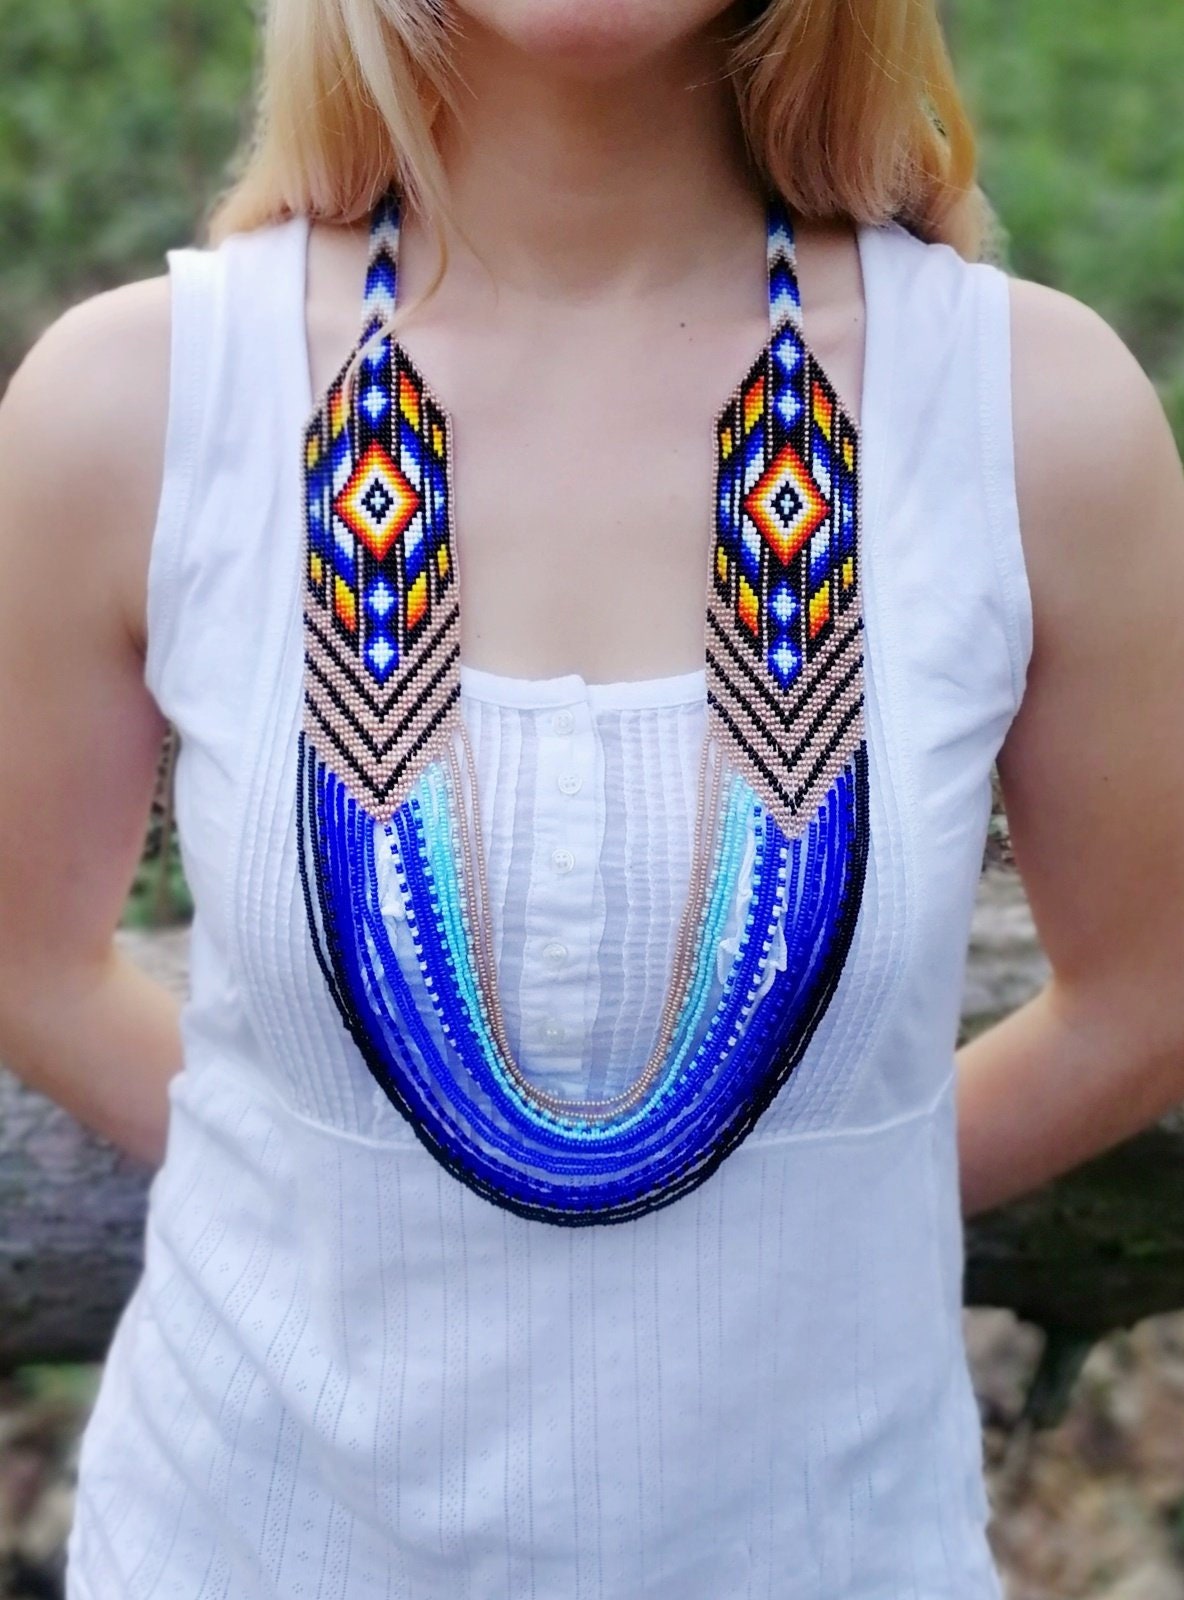 Colorful Mexican Bead Loom Bracelet, Loom Bead Bracelet, Native